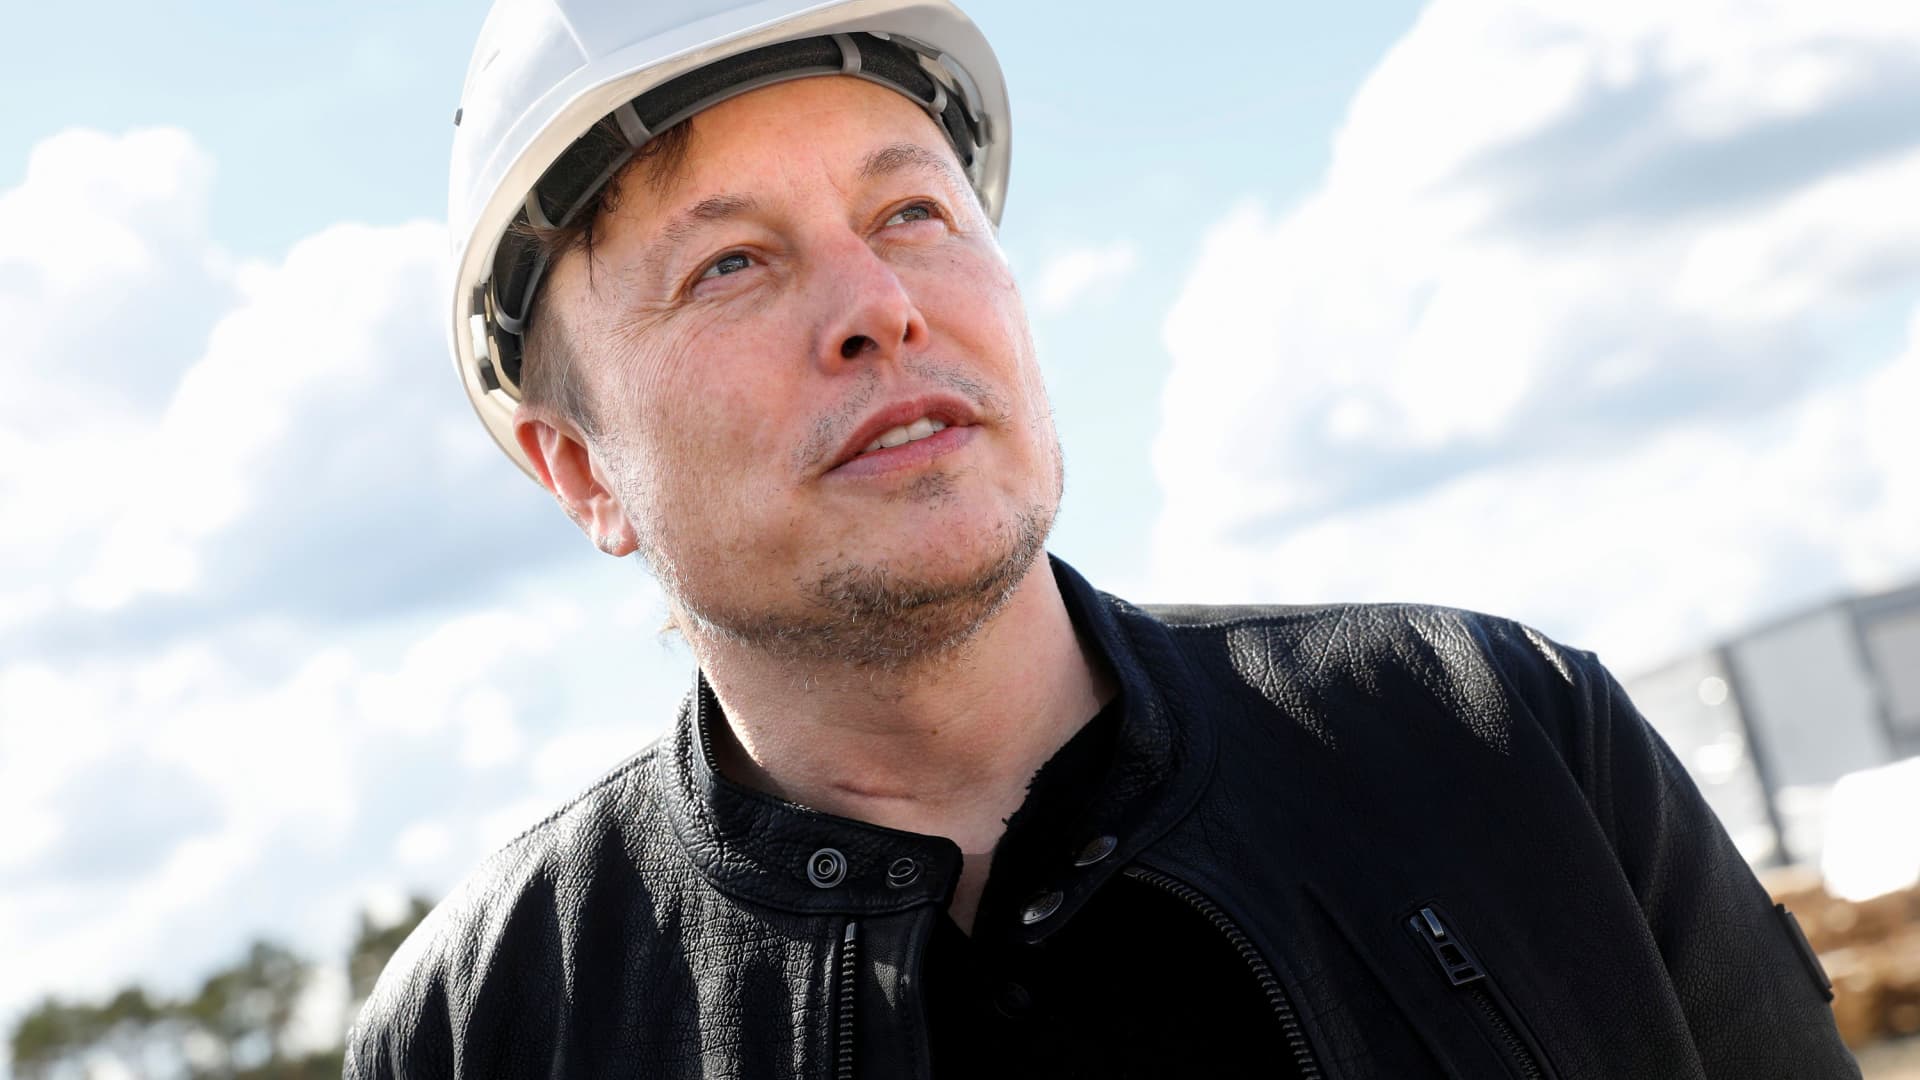 Tesla CEO Elon Musk opens electric vehicle plant